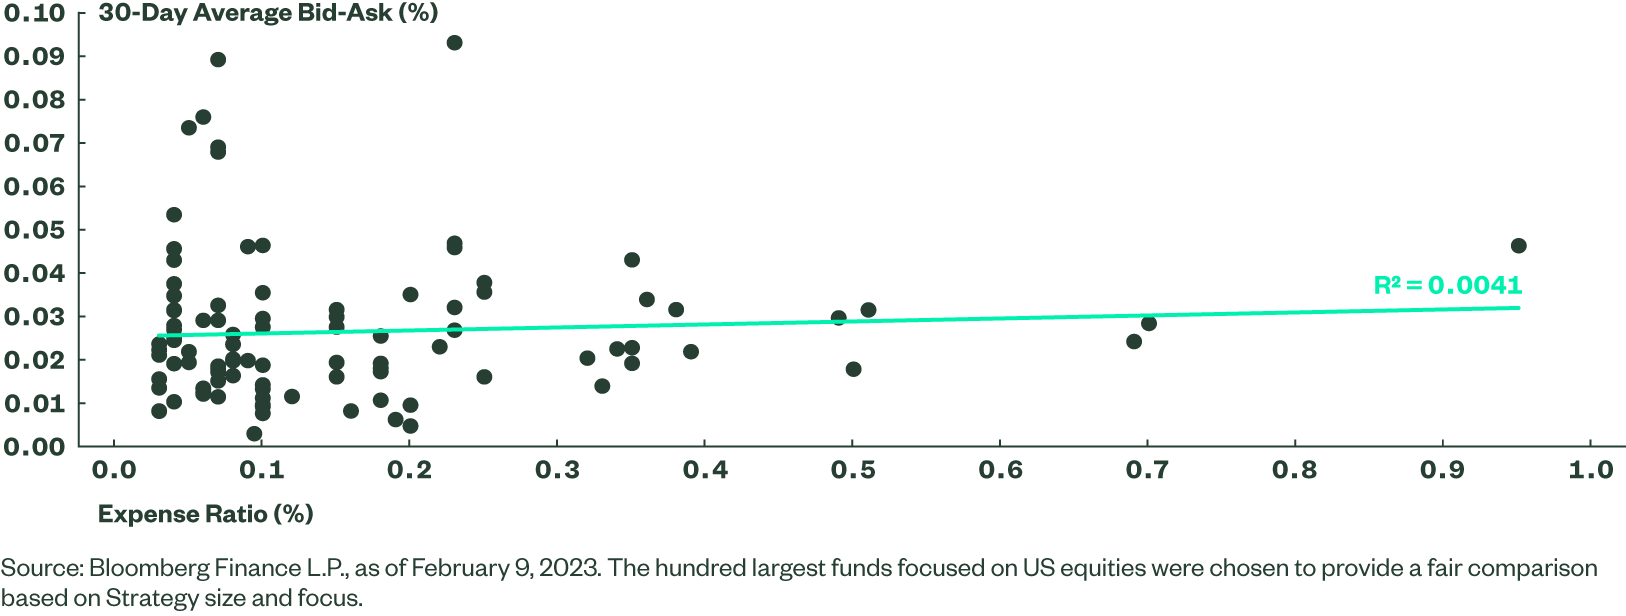 Figure 1: Bid-Ask Spread Versus Expense Ratio for the 100 Largest ETFs Focused on US Equities